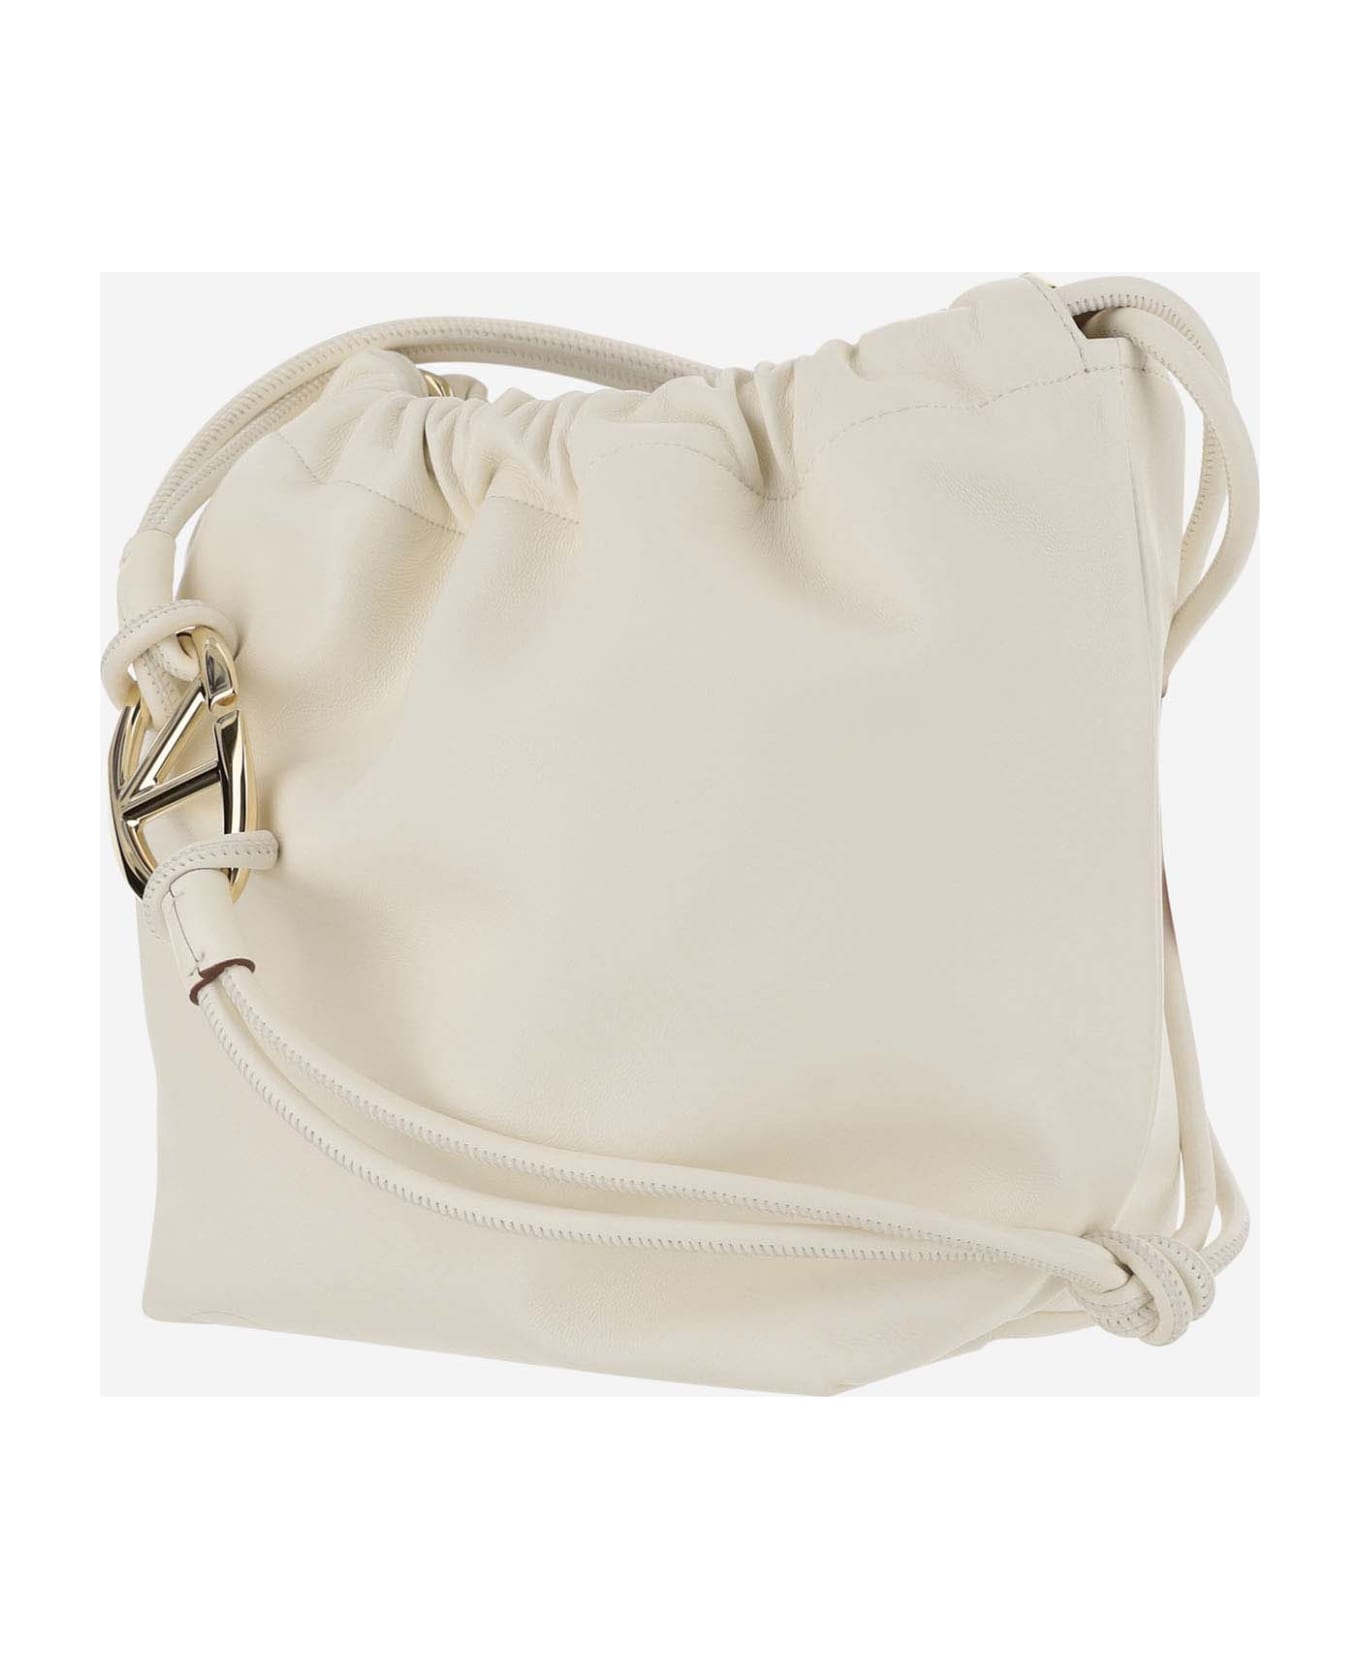 Valentino Garavani Vlogo Pouf Pouch Bag In Nappa Leather - White